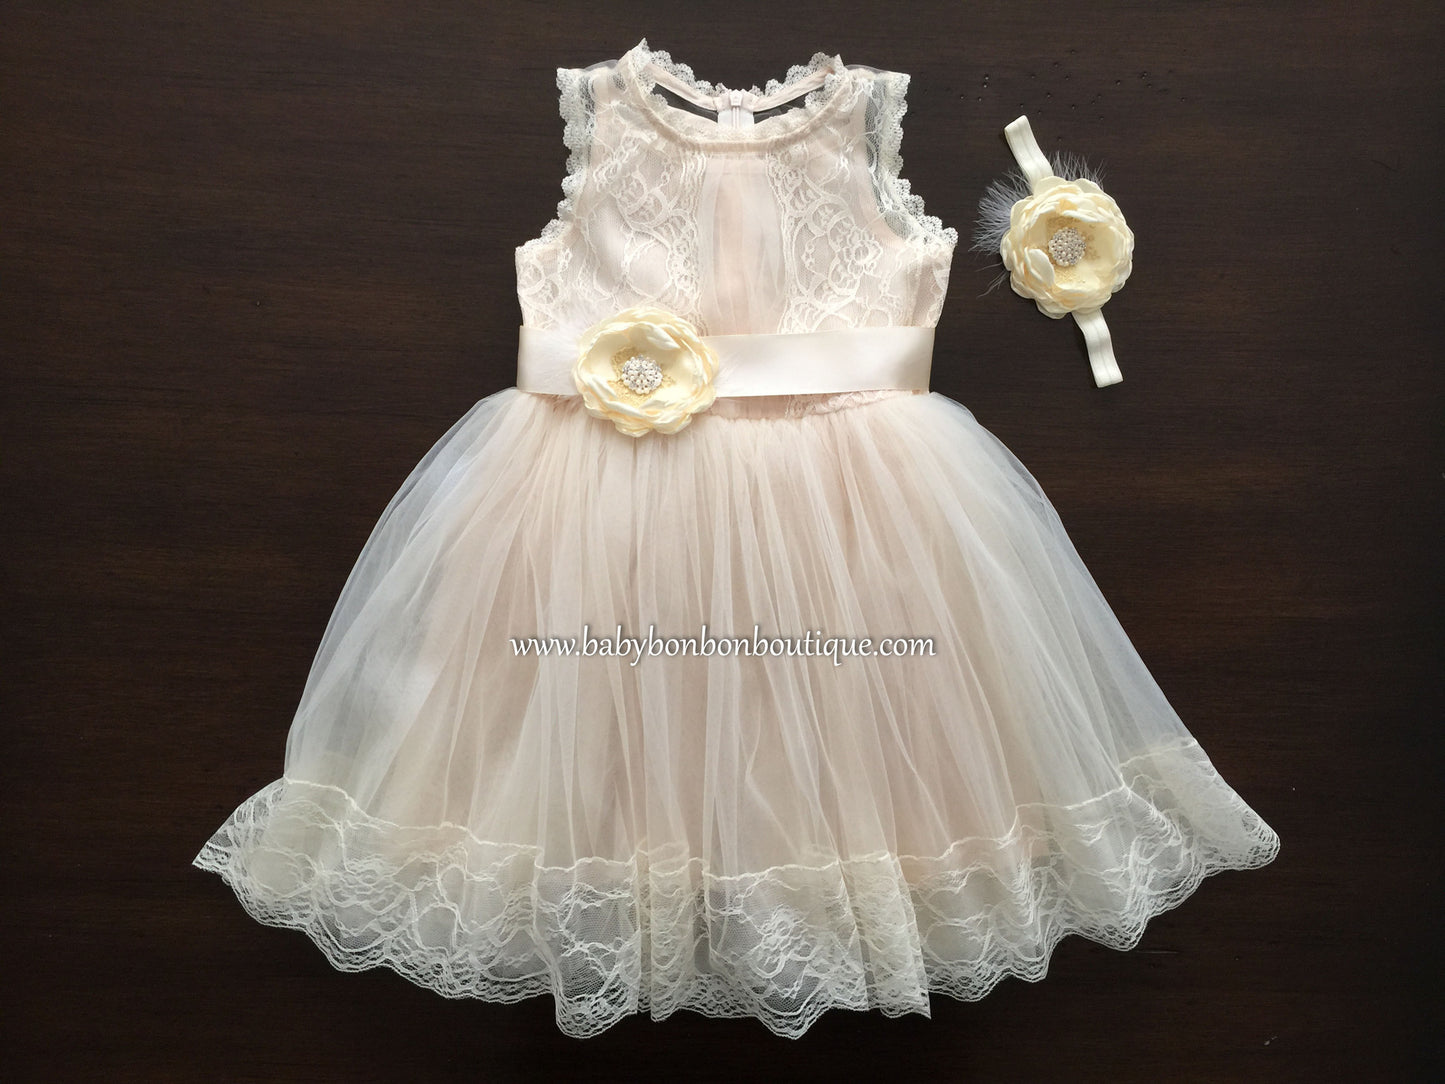 Lace Flower Girl Dress, Baby Baptism Dress